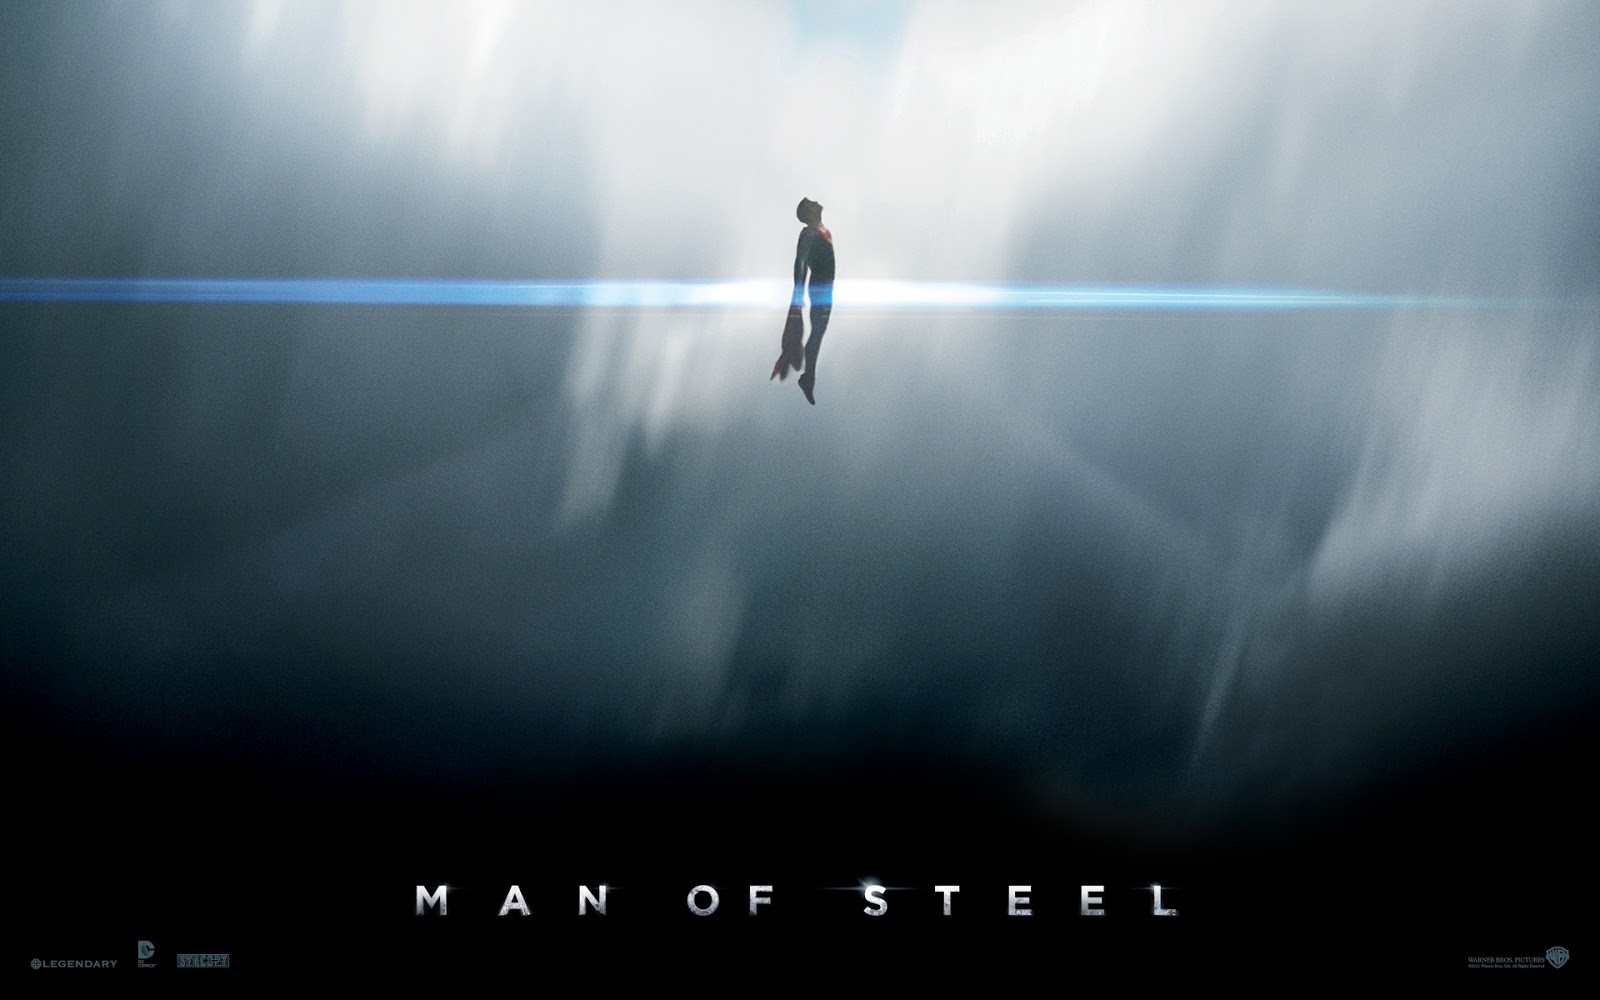 Superman as Jesus -- Christian imagery in Man of Steel